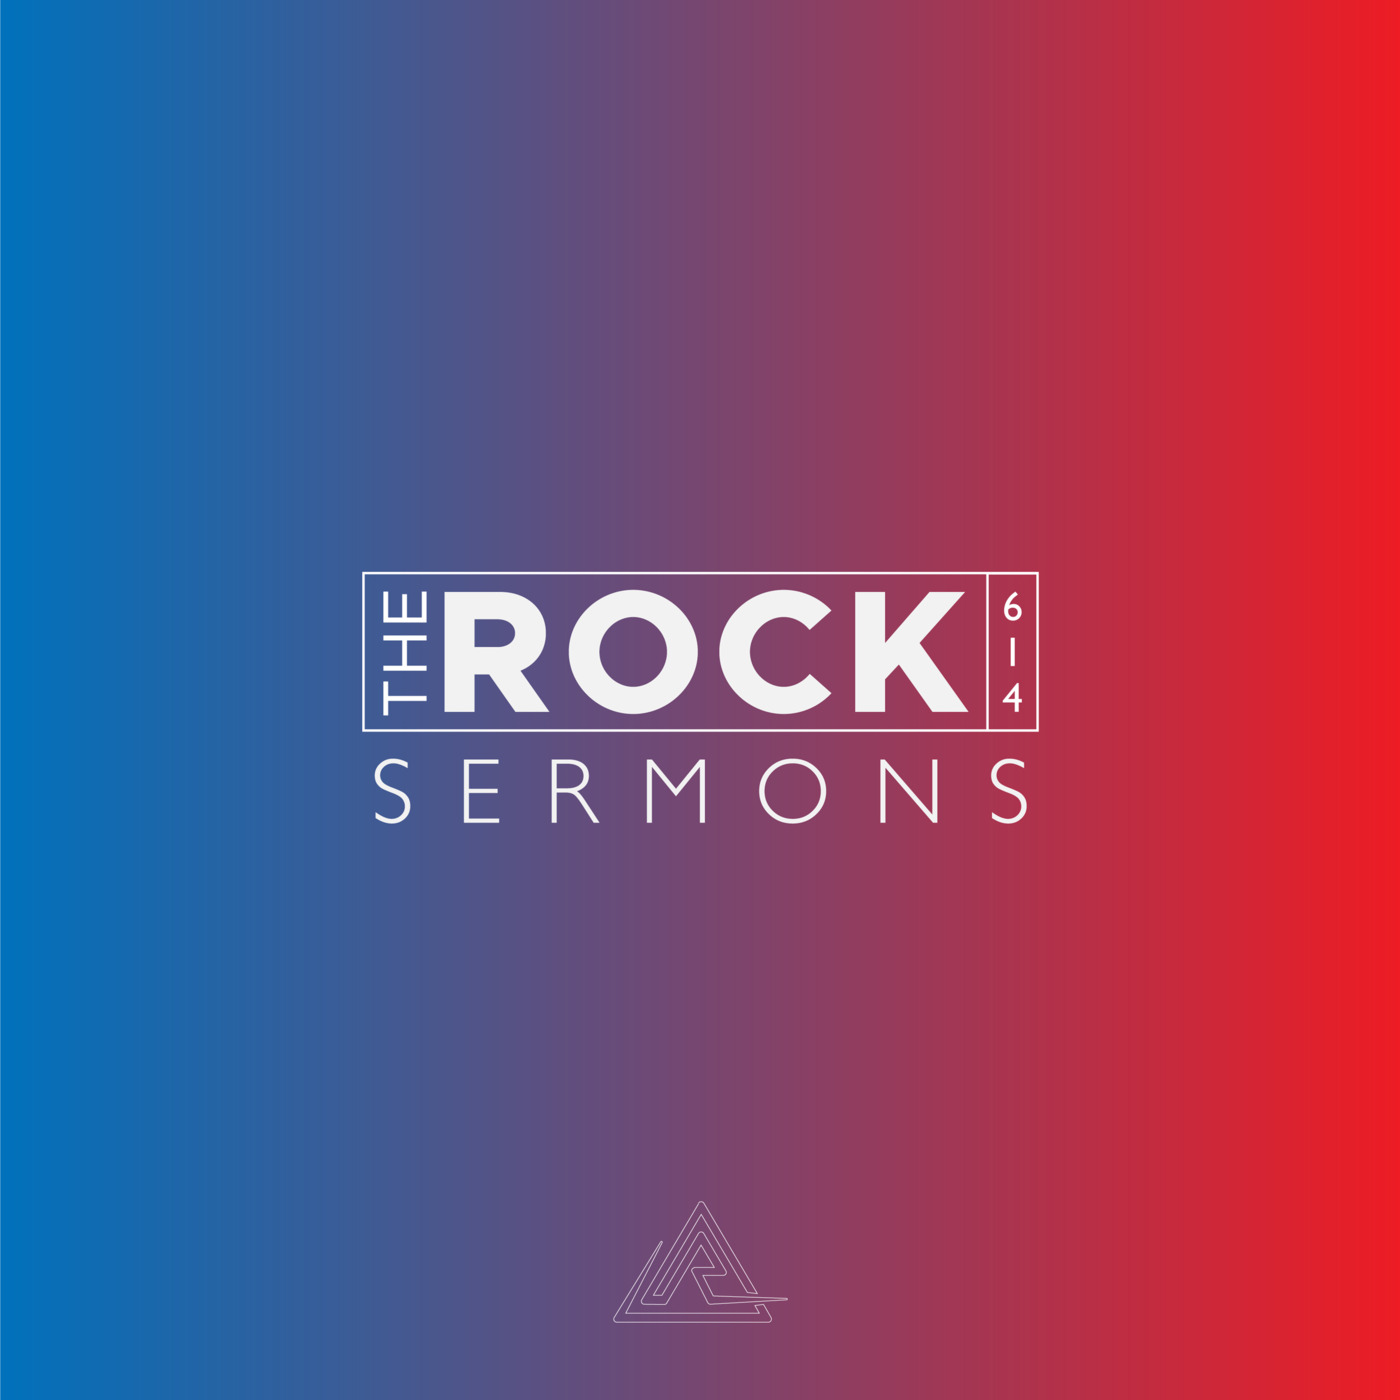 The Rock 614 Sermons